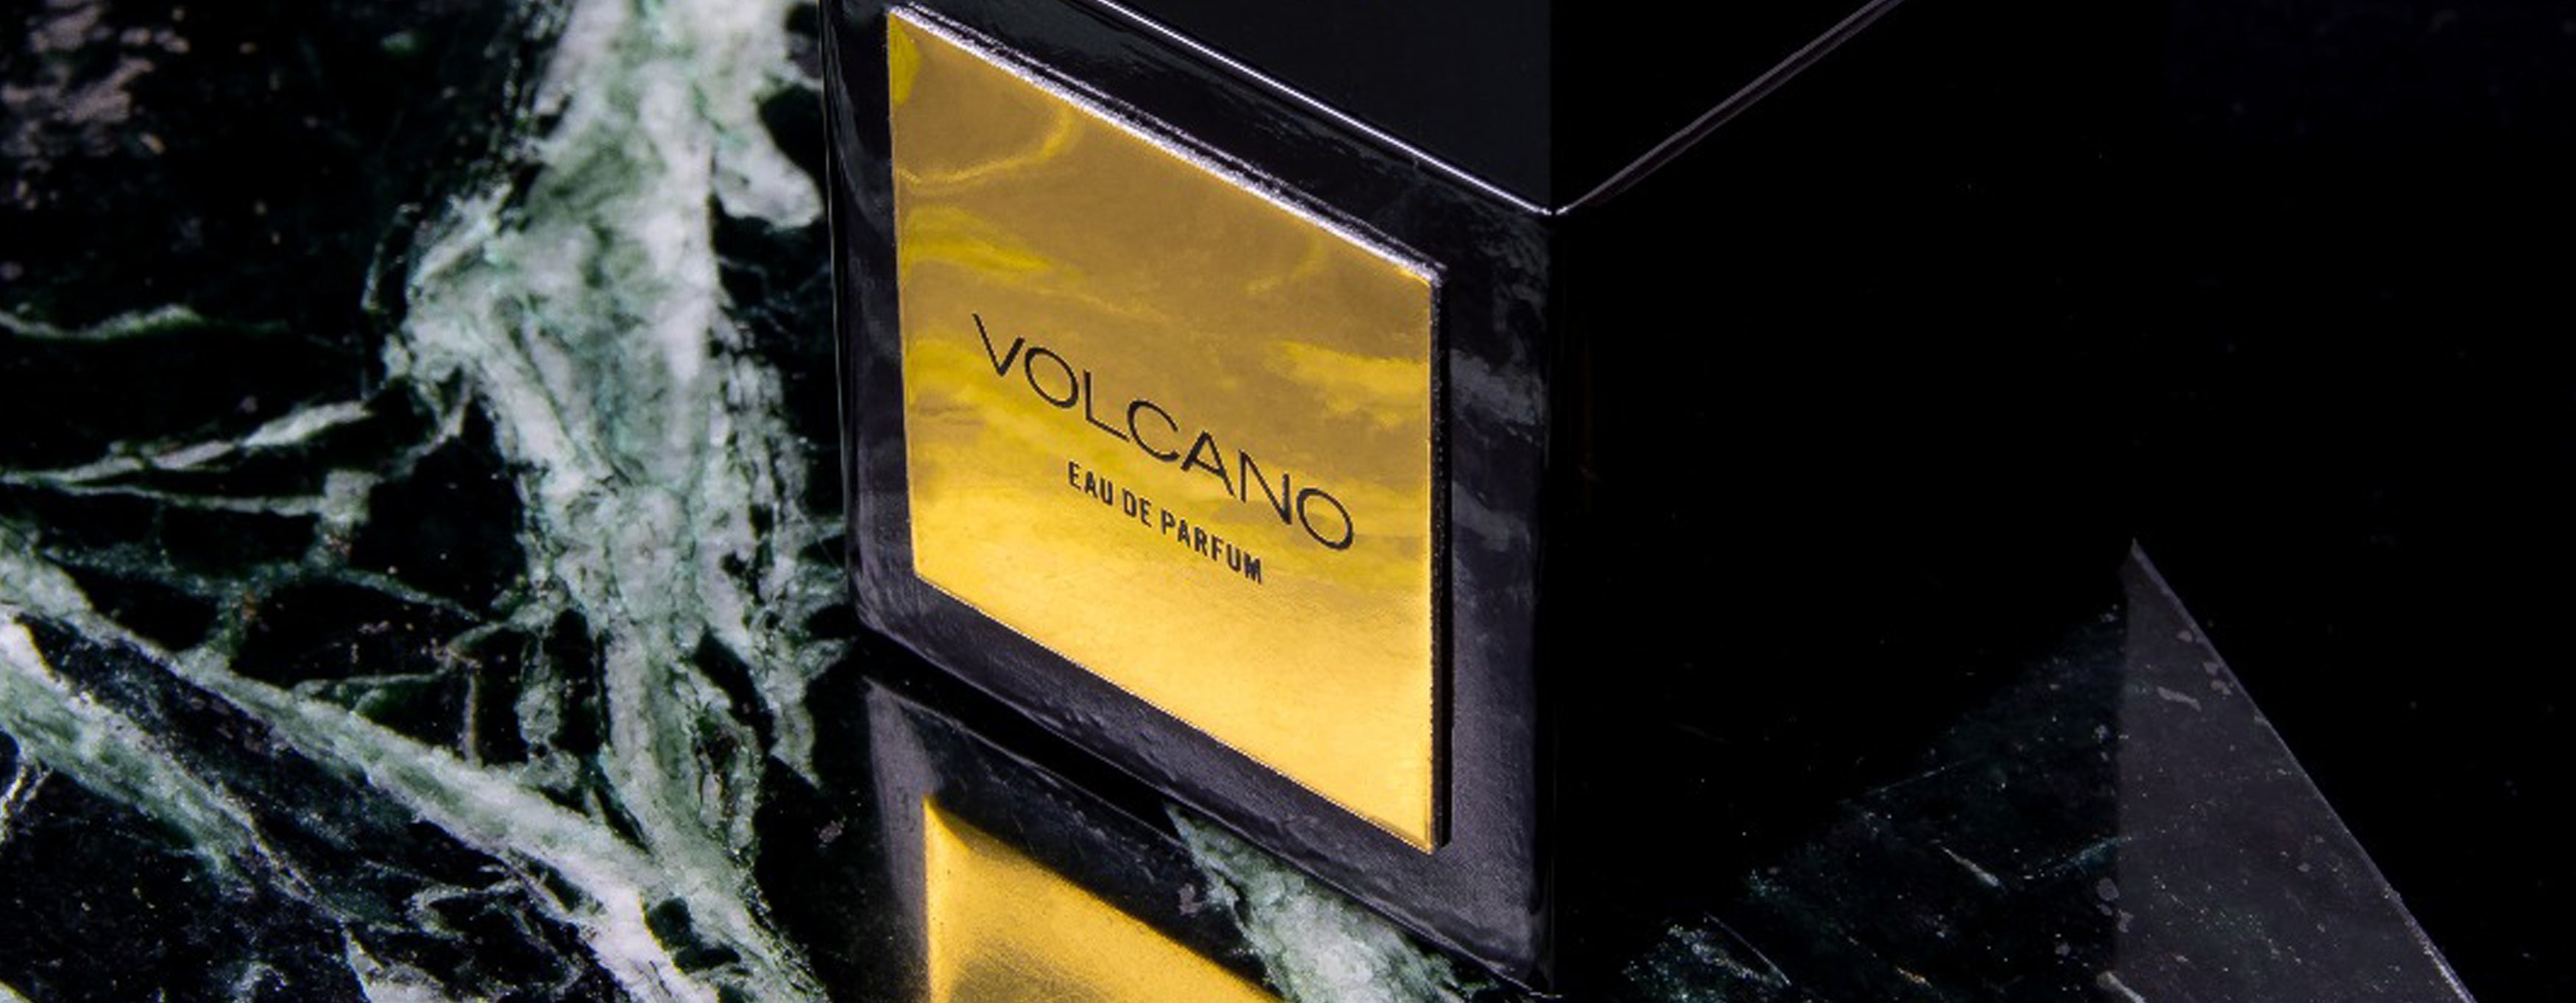 Meet the perfumer who created Volcano